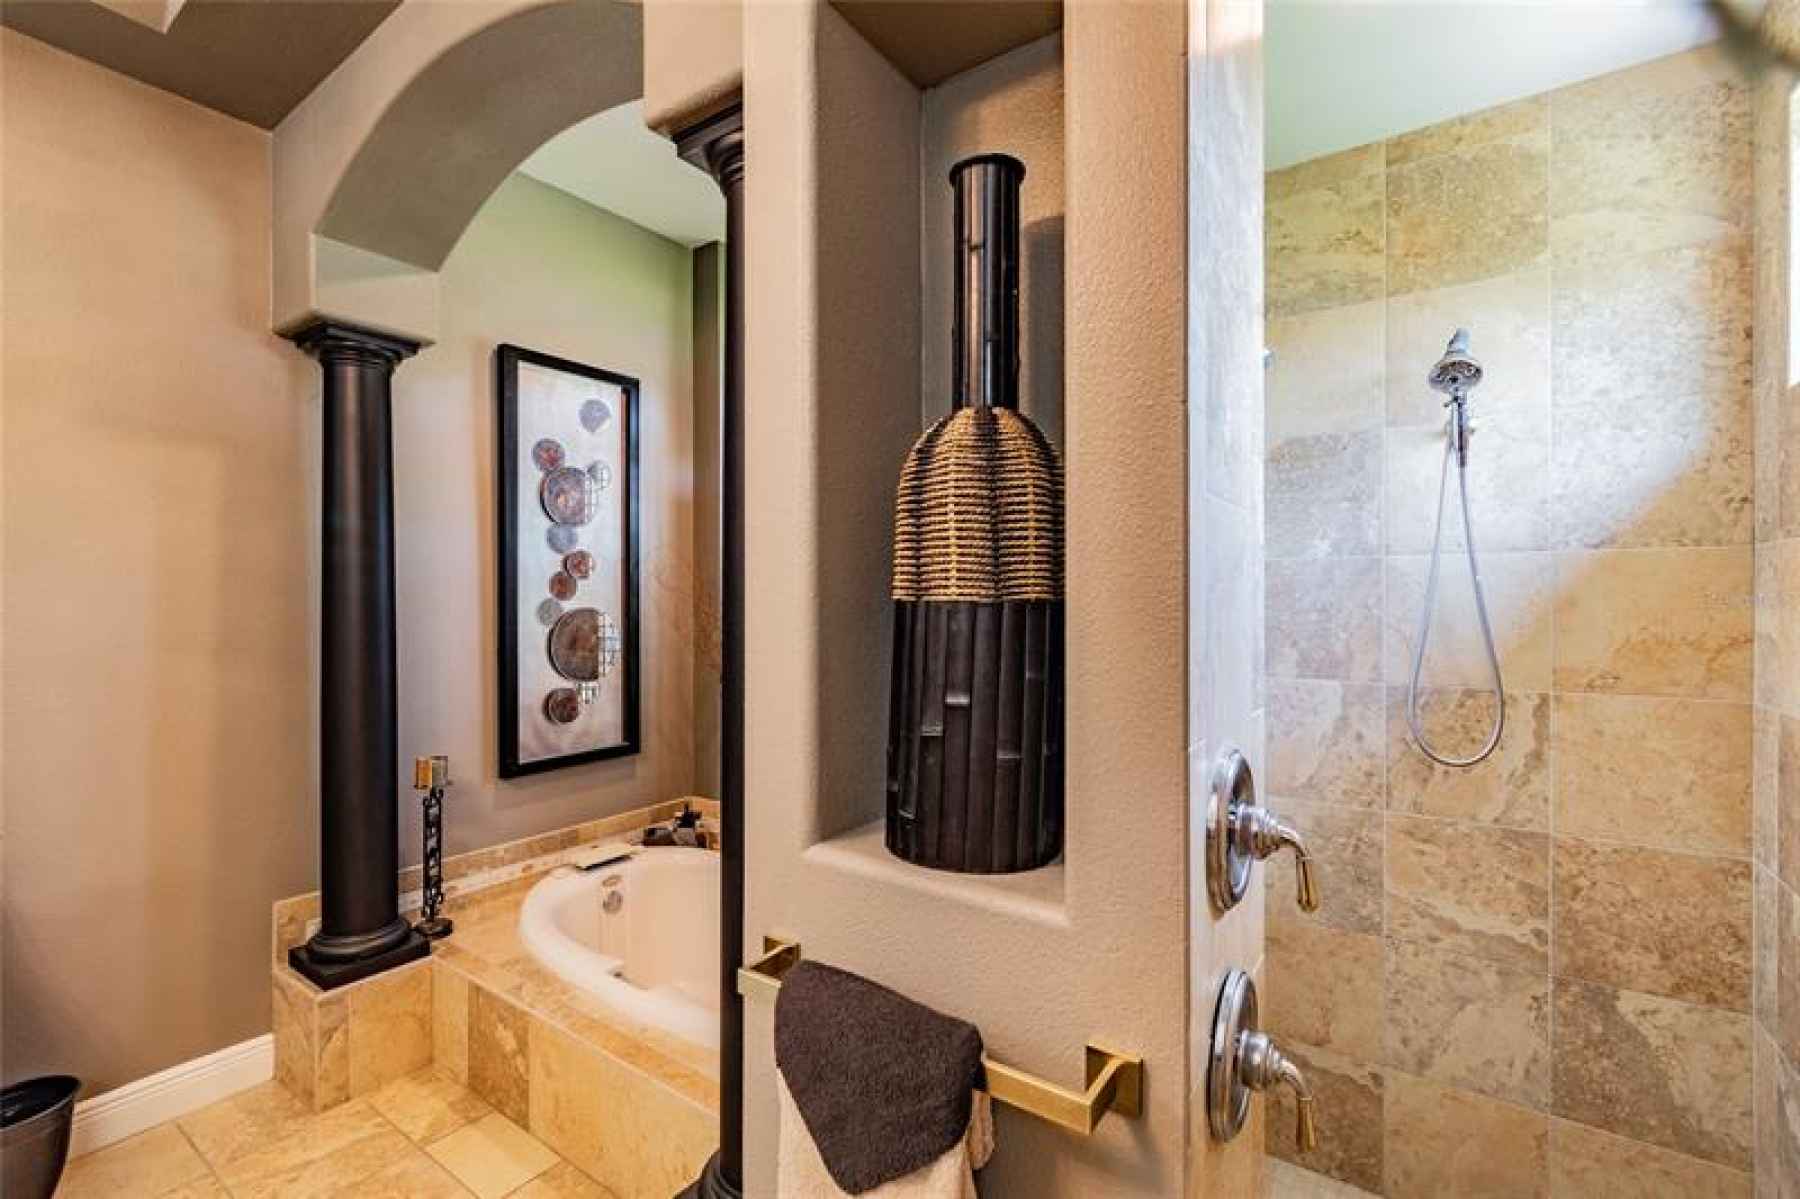 Master bathroom garden tub and shower